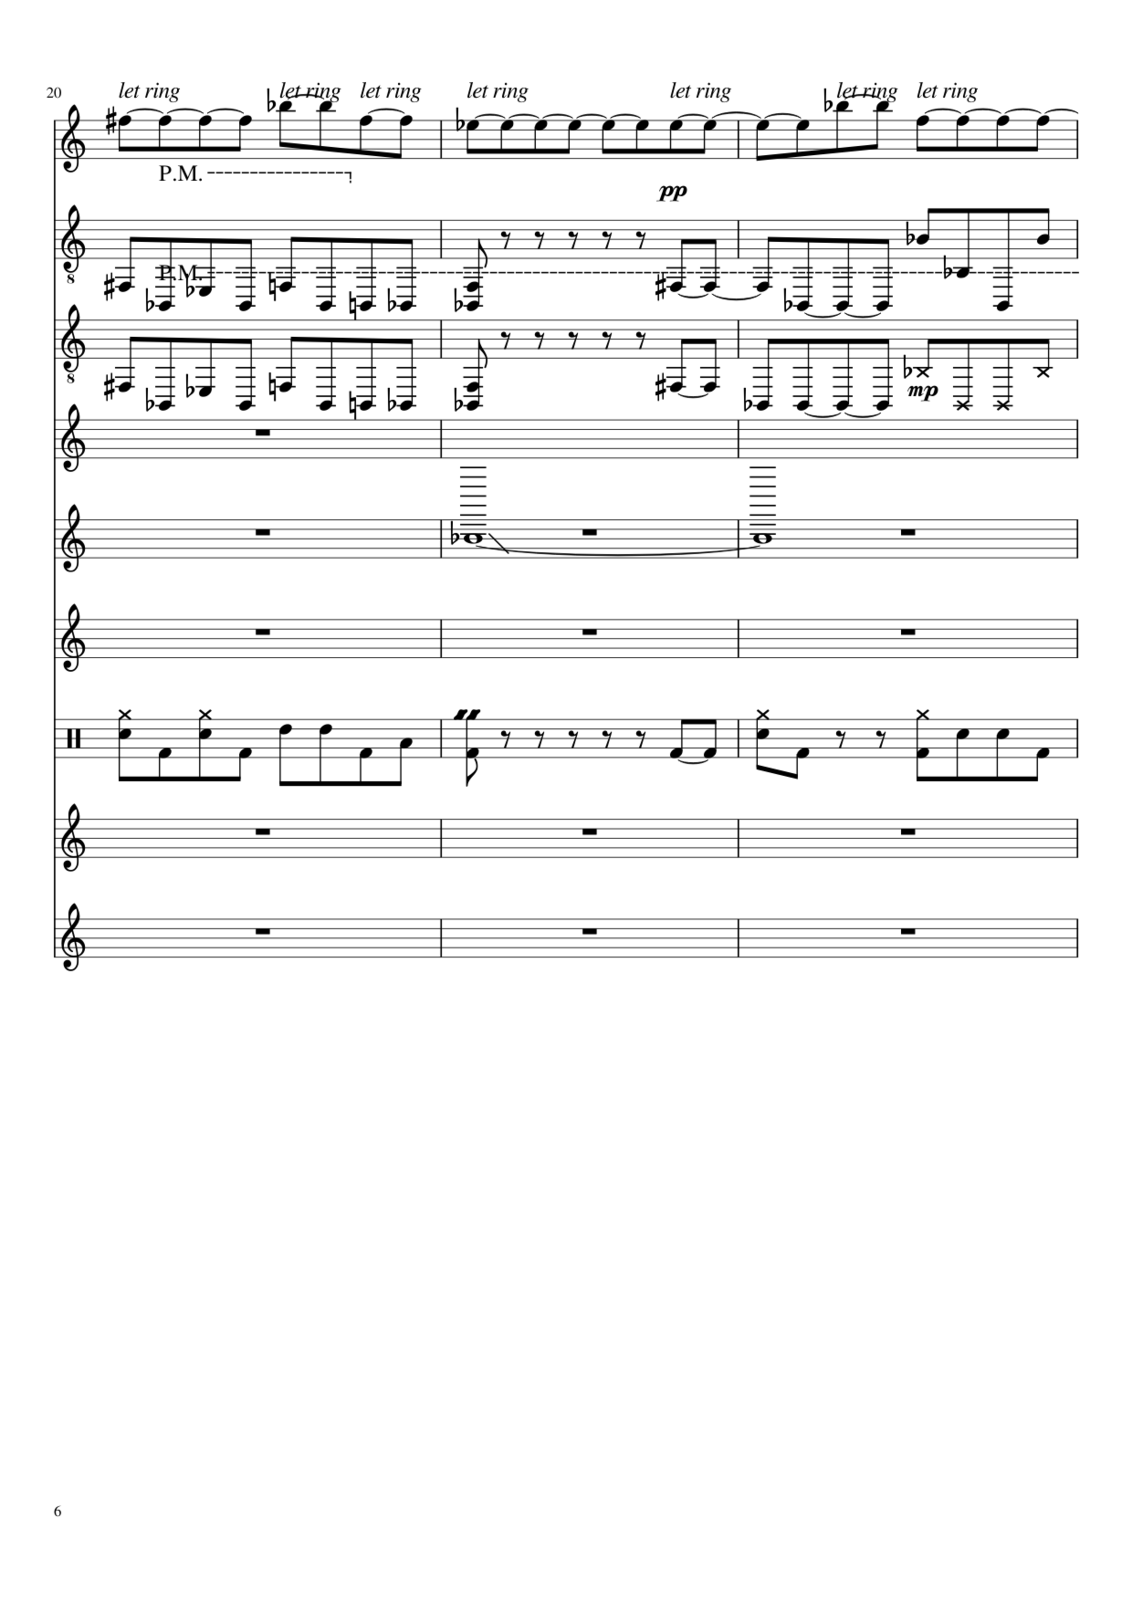 Gorod, kotorogo net slide, Image 1